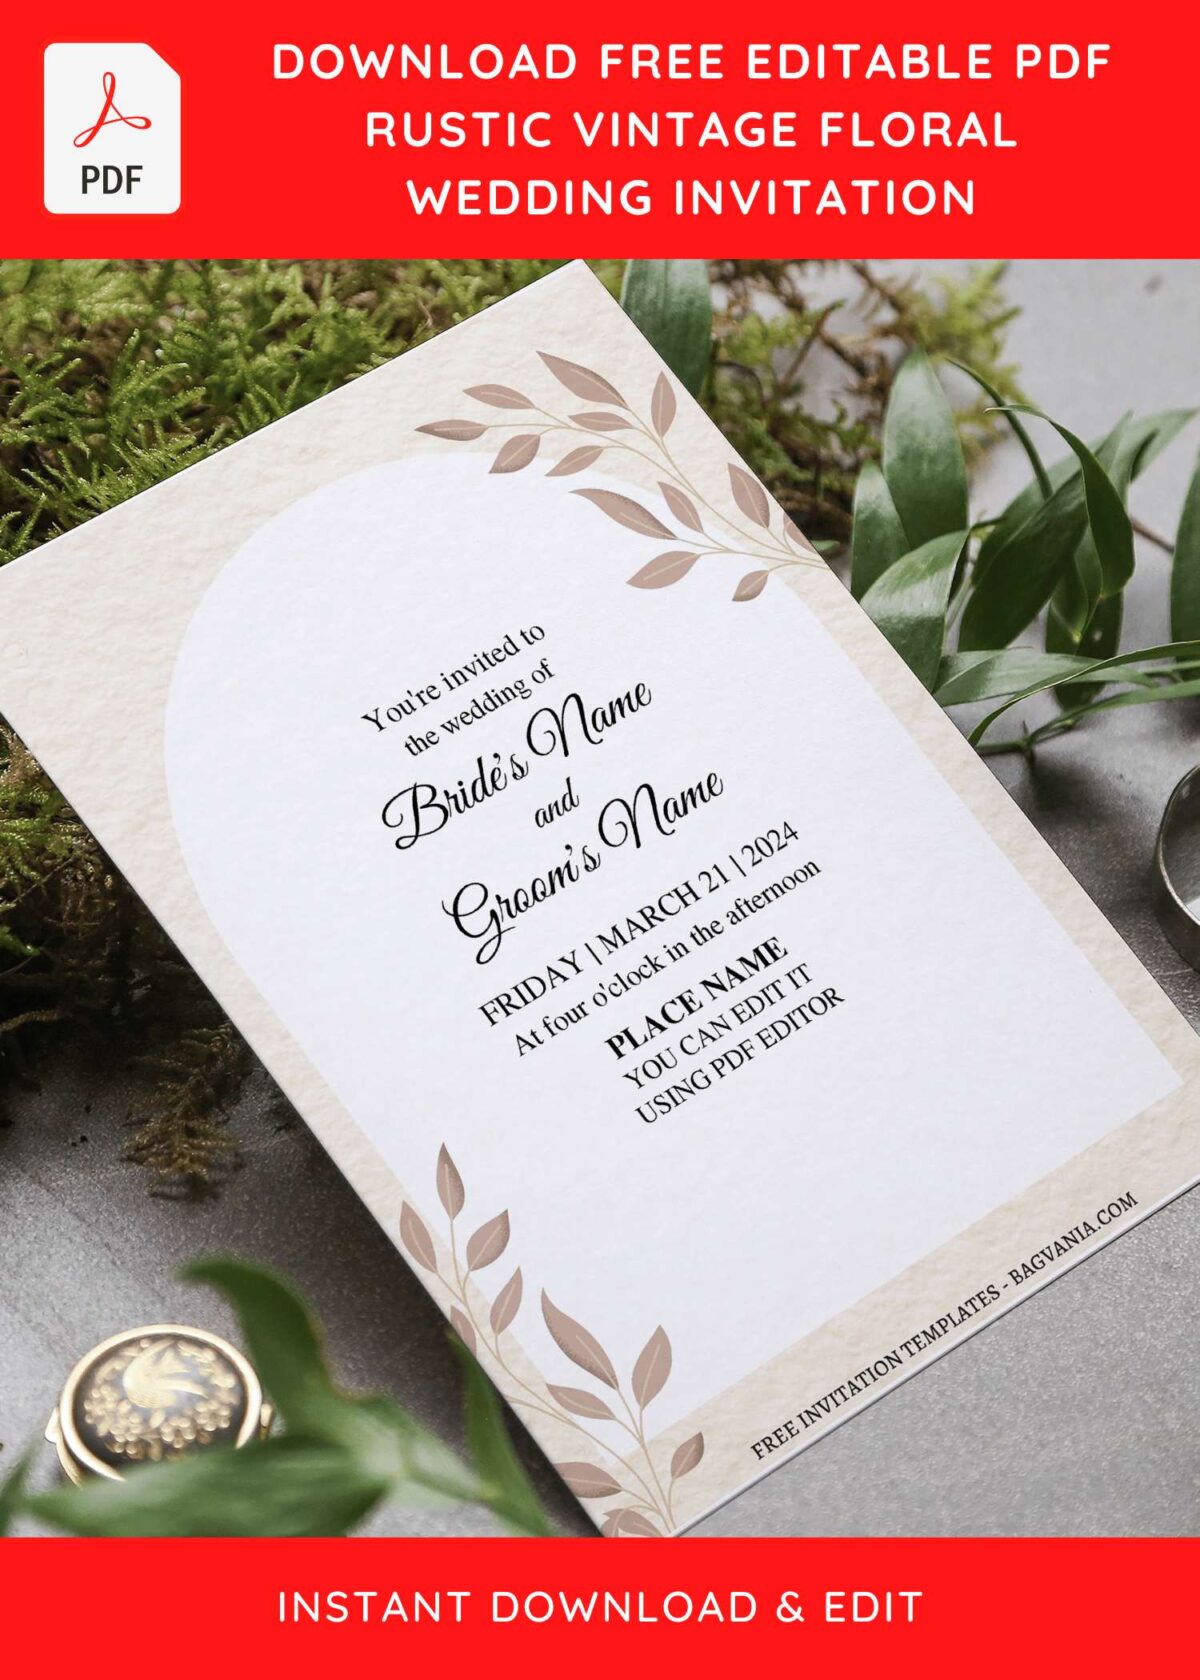 (Free Editable PDF) Vintage Rustic Greenery Wedding Invitation Templates with Boho eucalyptus